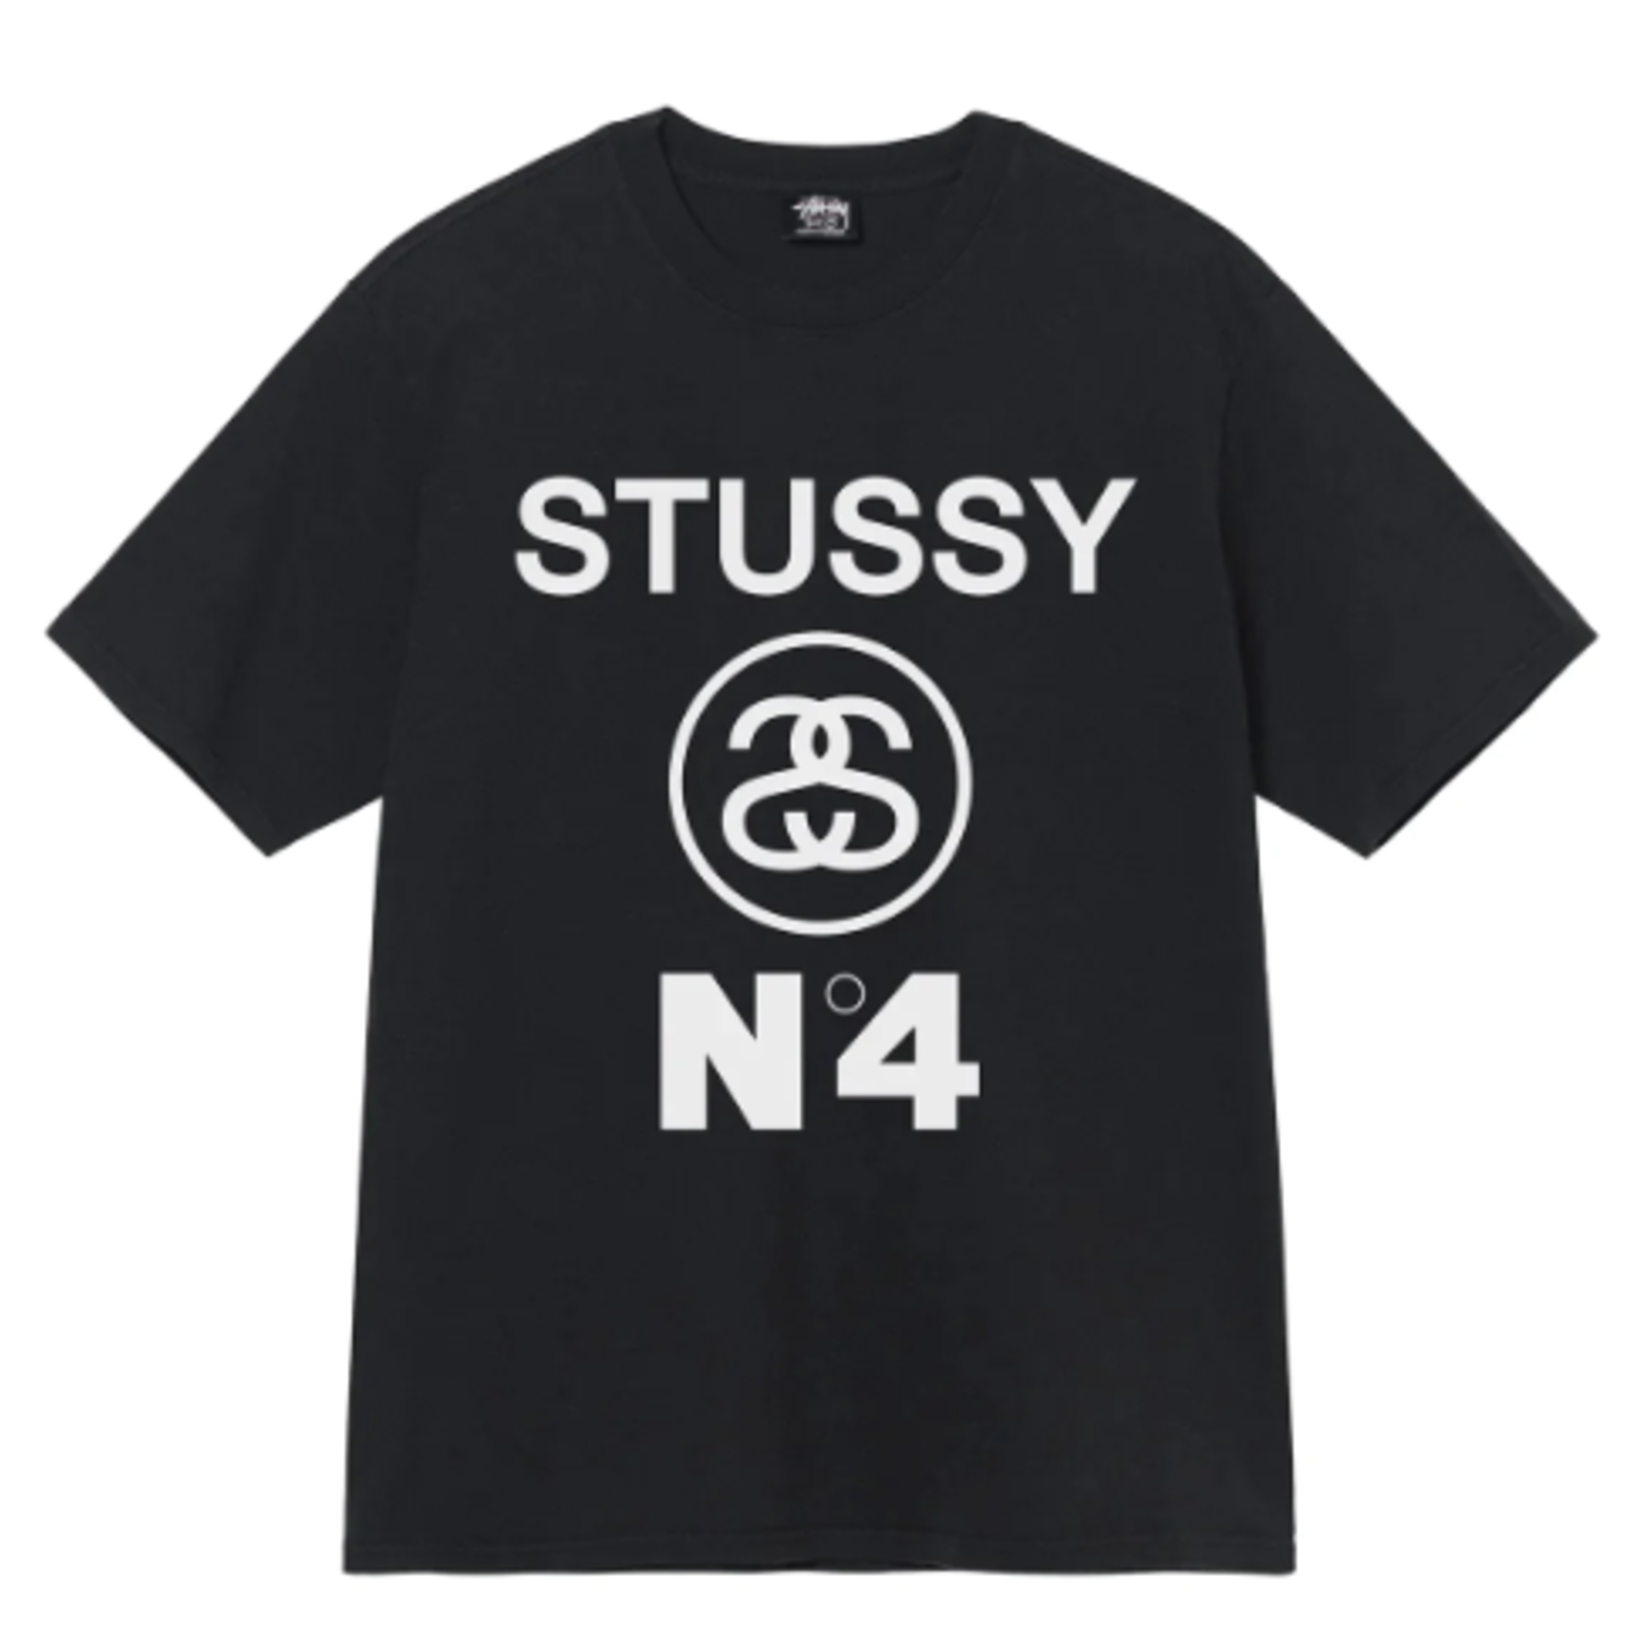 Stussy Stussy No.4 Pigment Dyed Tee Black Size Medium, DS BRAND NEW